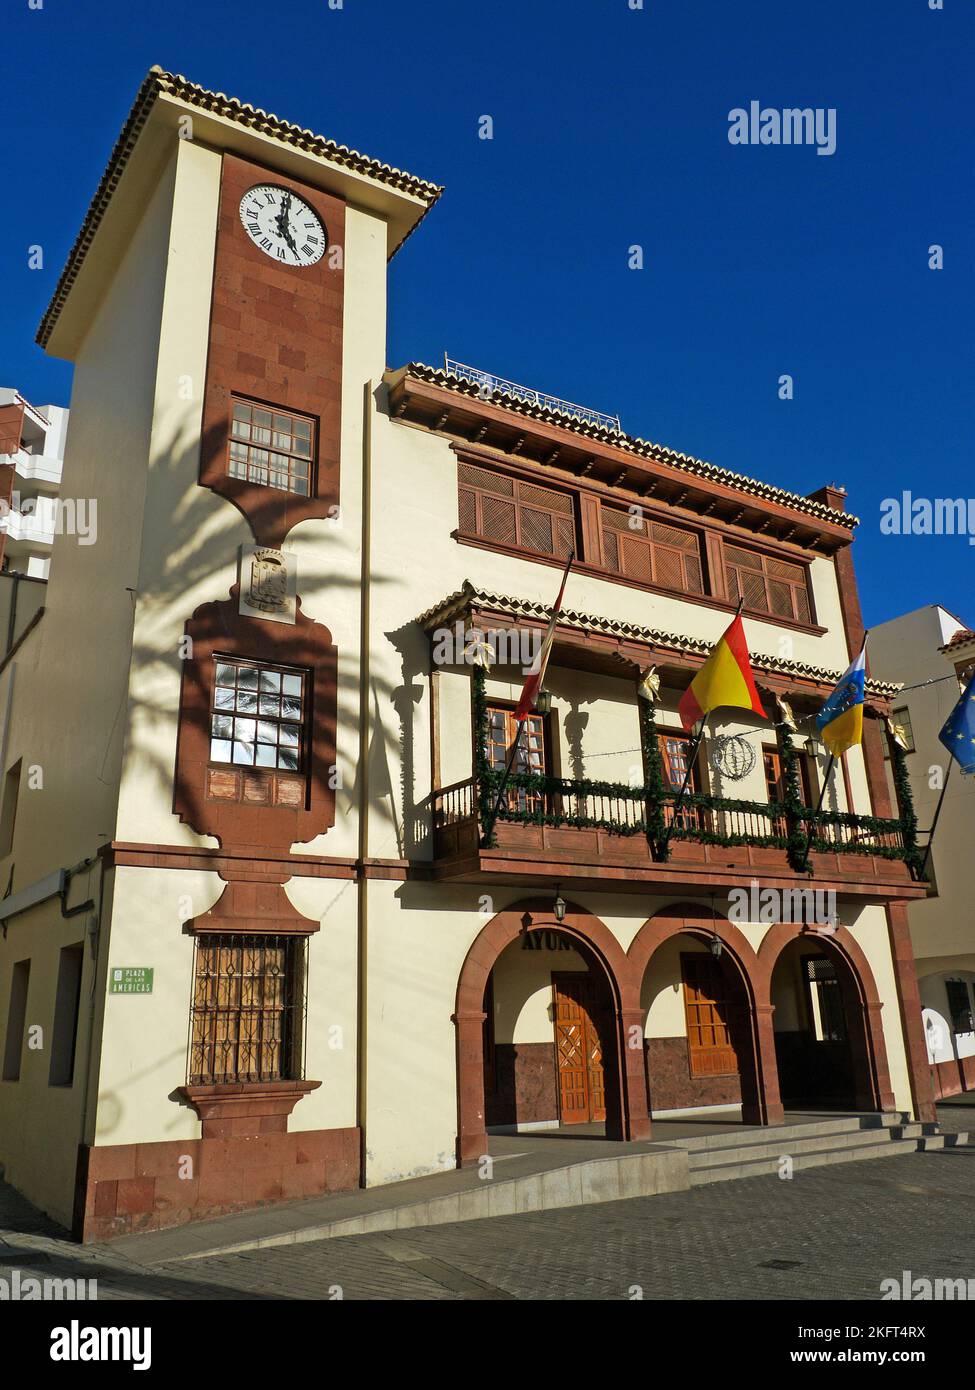 Ayuntamiento (Town Hall) of San Sebastián de La Gomera, Canary Islands, Spain. 2018-01-04 16:57 WET (UTC). Stock Photo